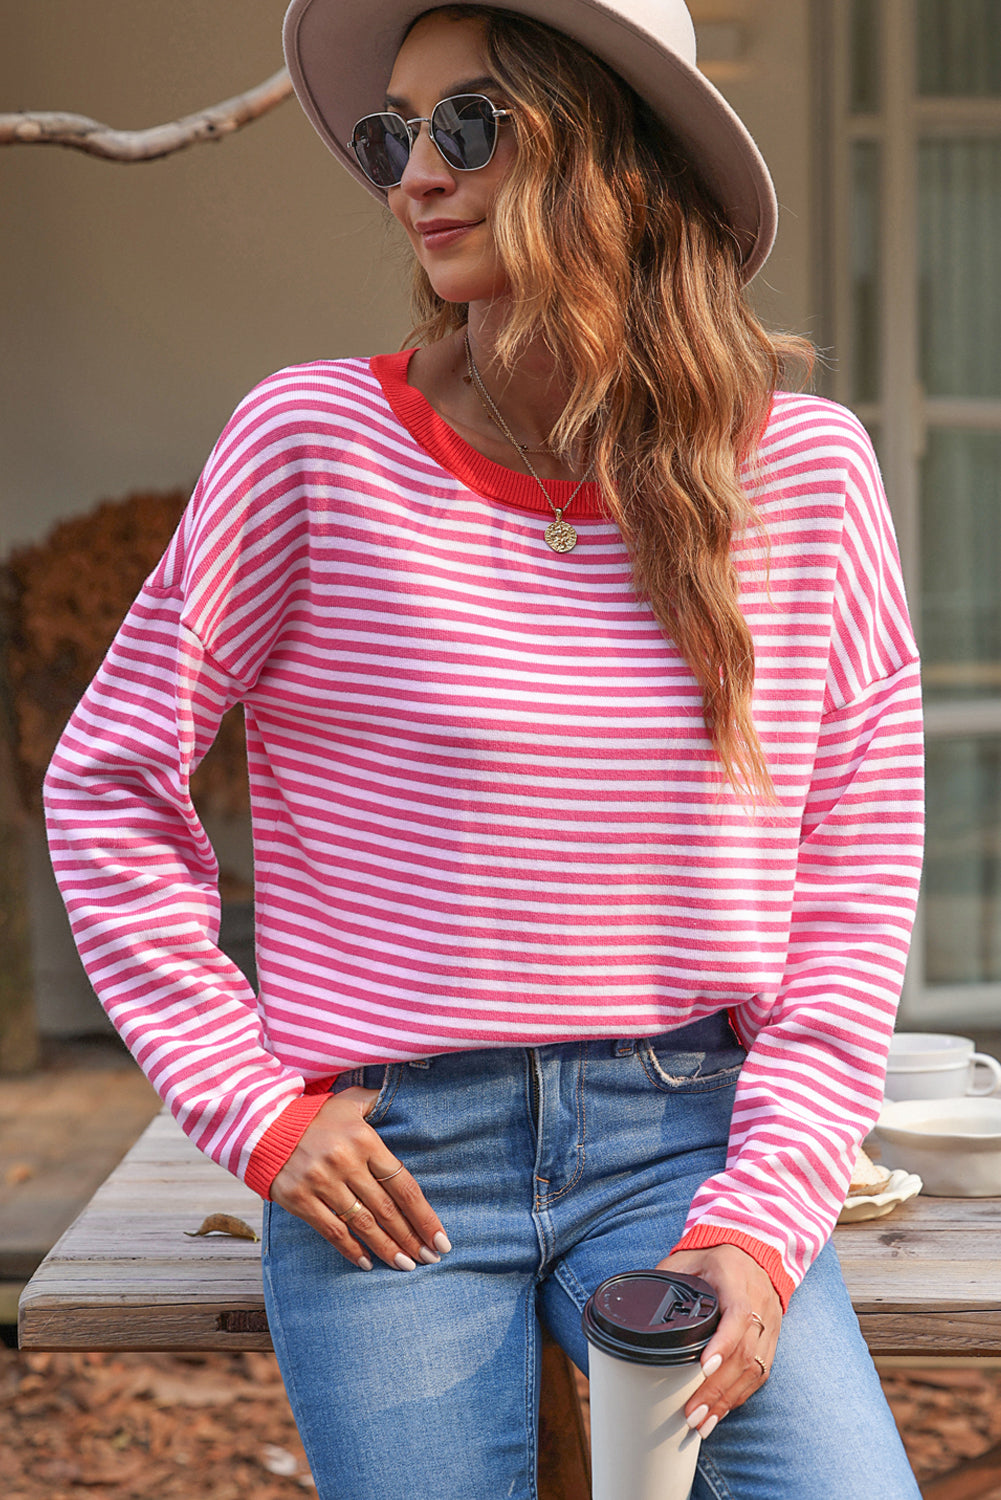 Ružičasti kontrastni prugasti pulover na spuštena ramena